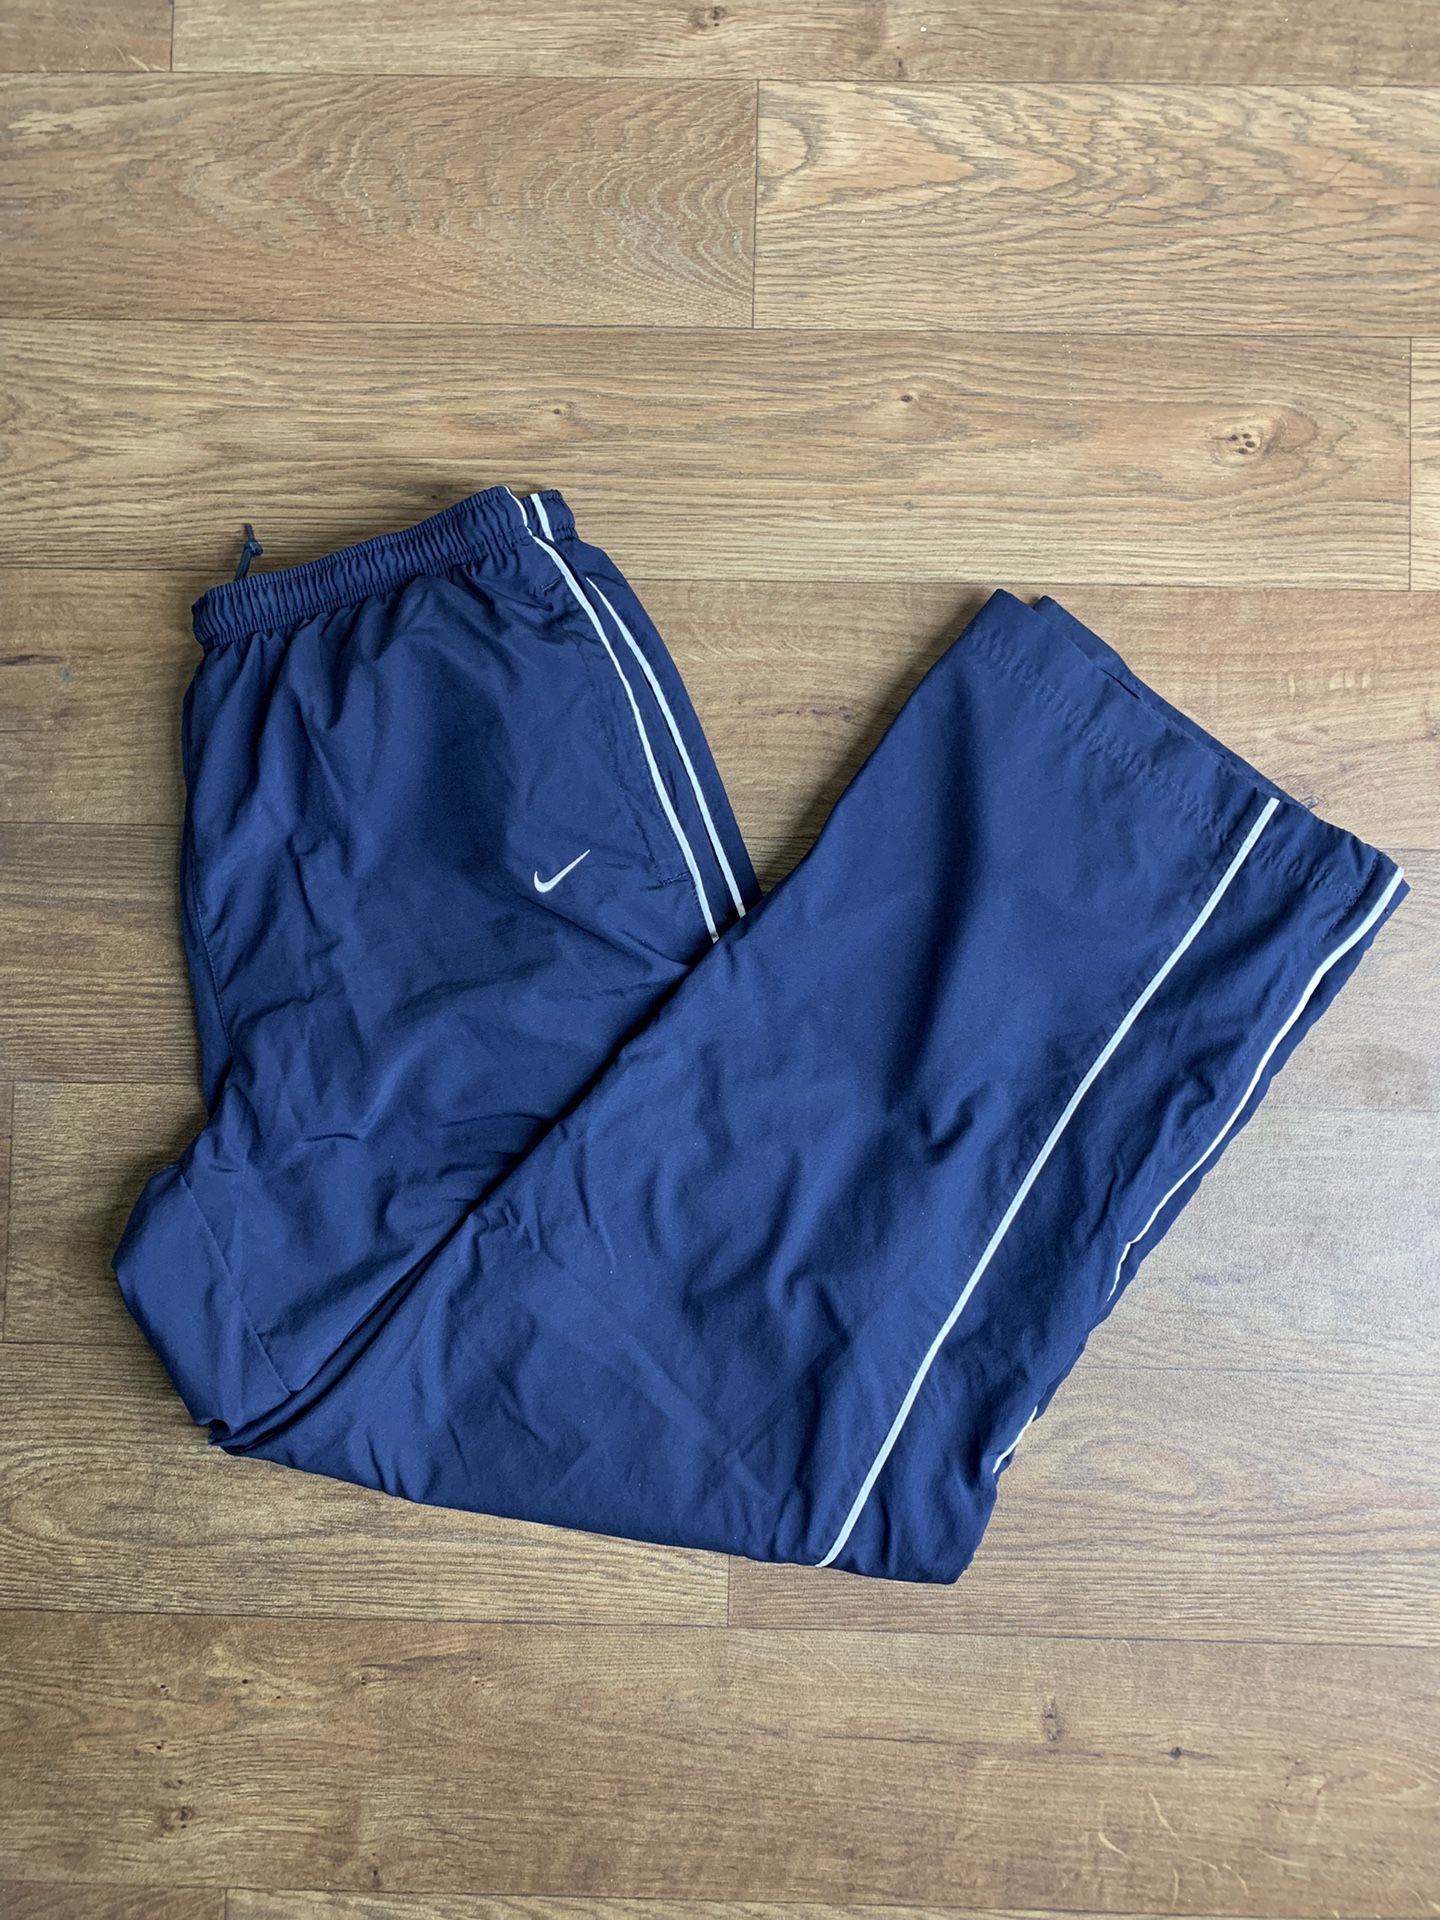 Vintage Y2K Nike Track Pants for Sale in Escondido, CA - OfferUp